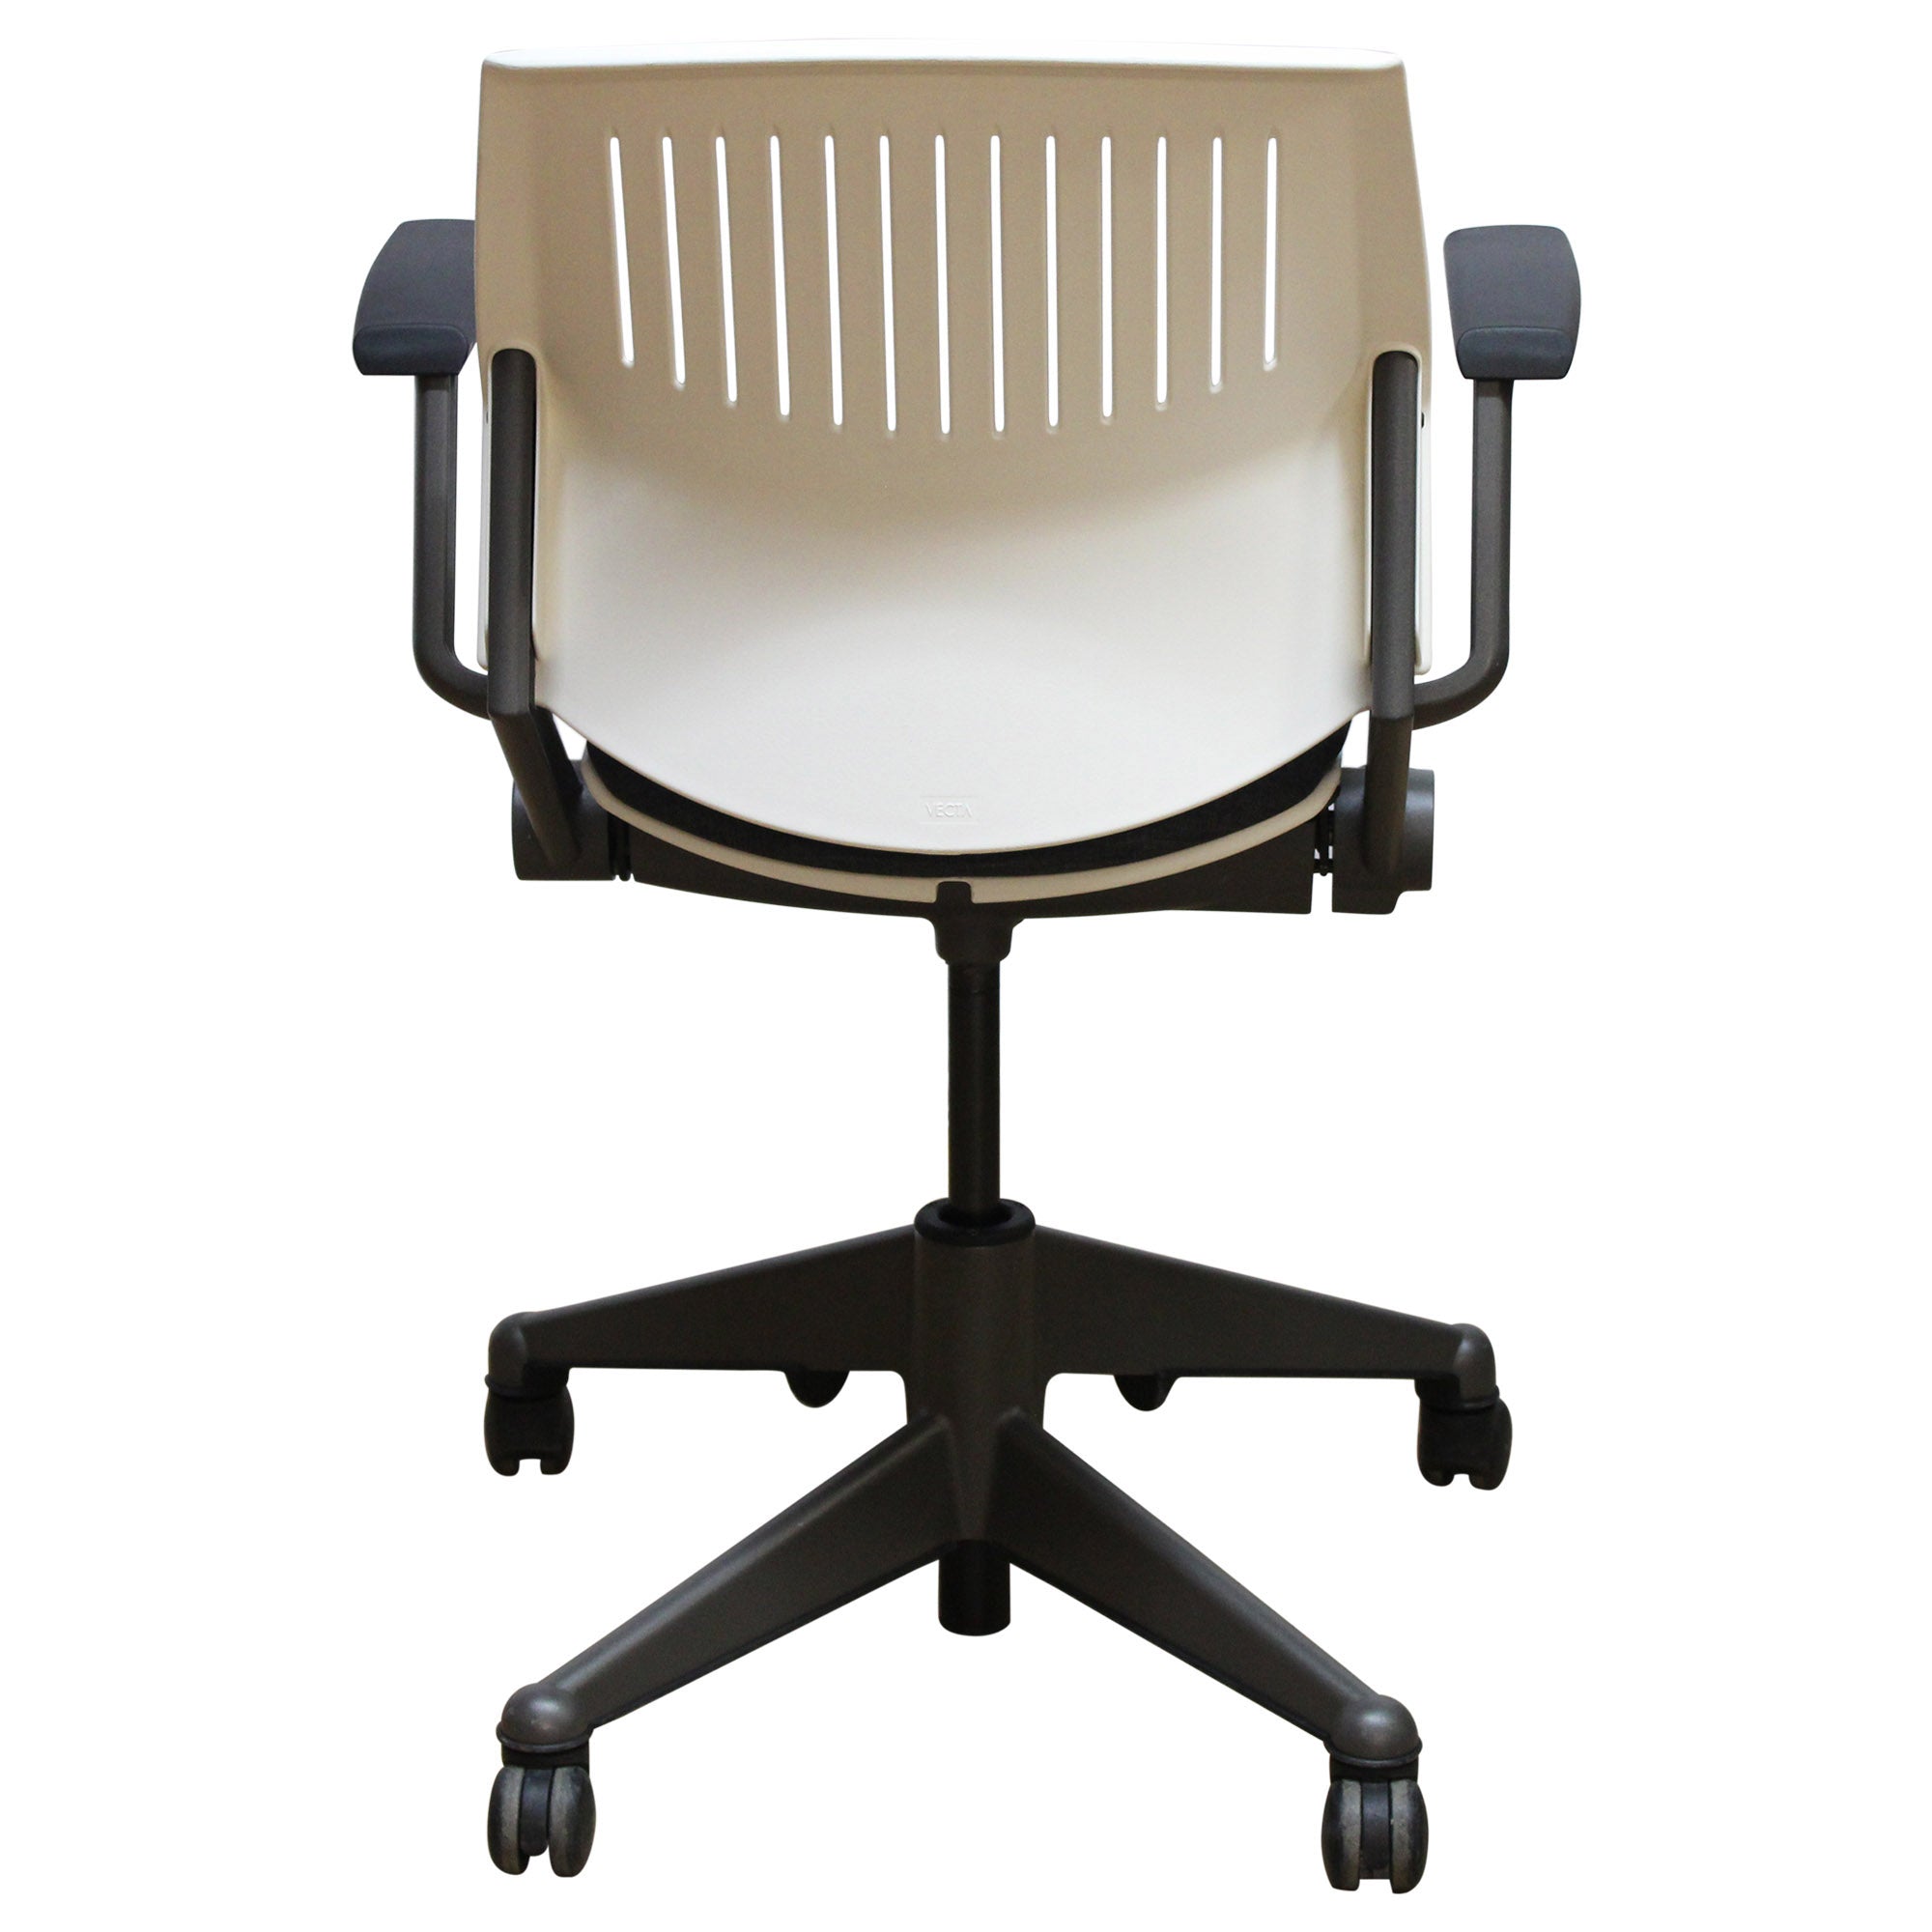 Steelcase Vecta Kart Task Chair - Graphite Base - Preowned